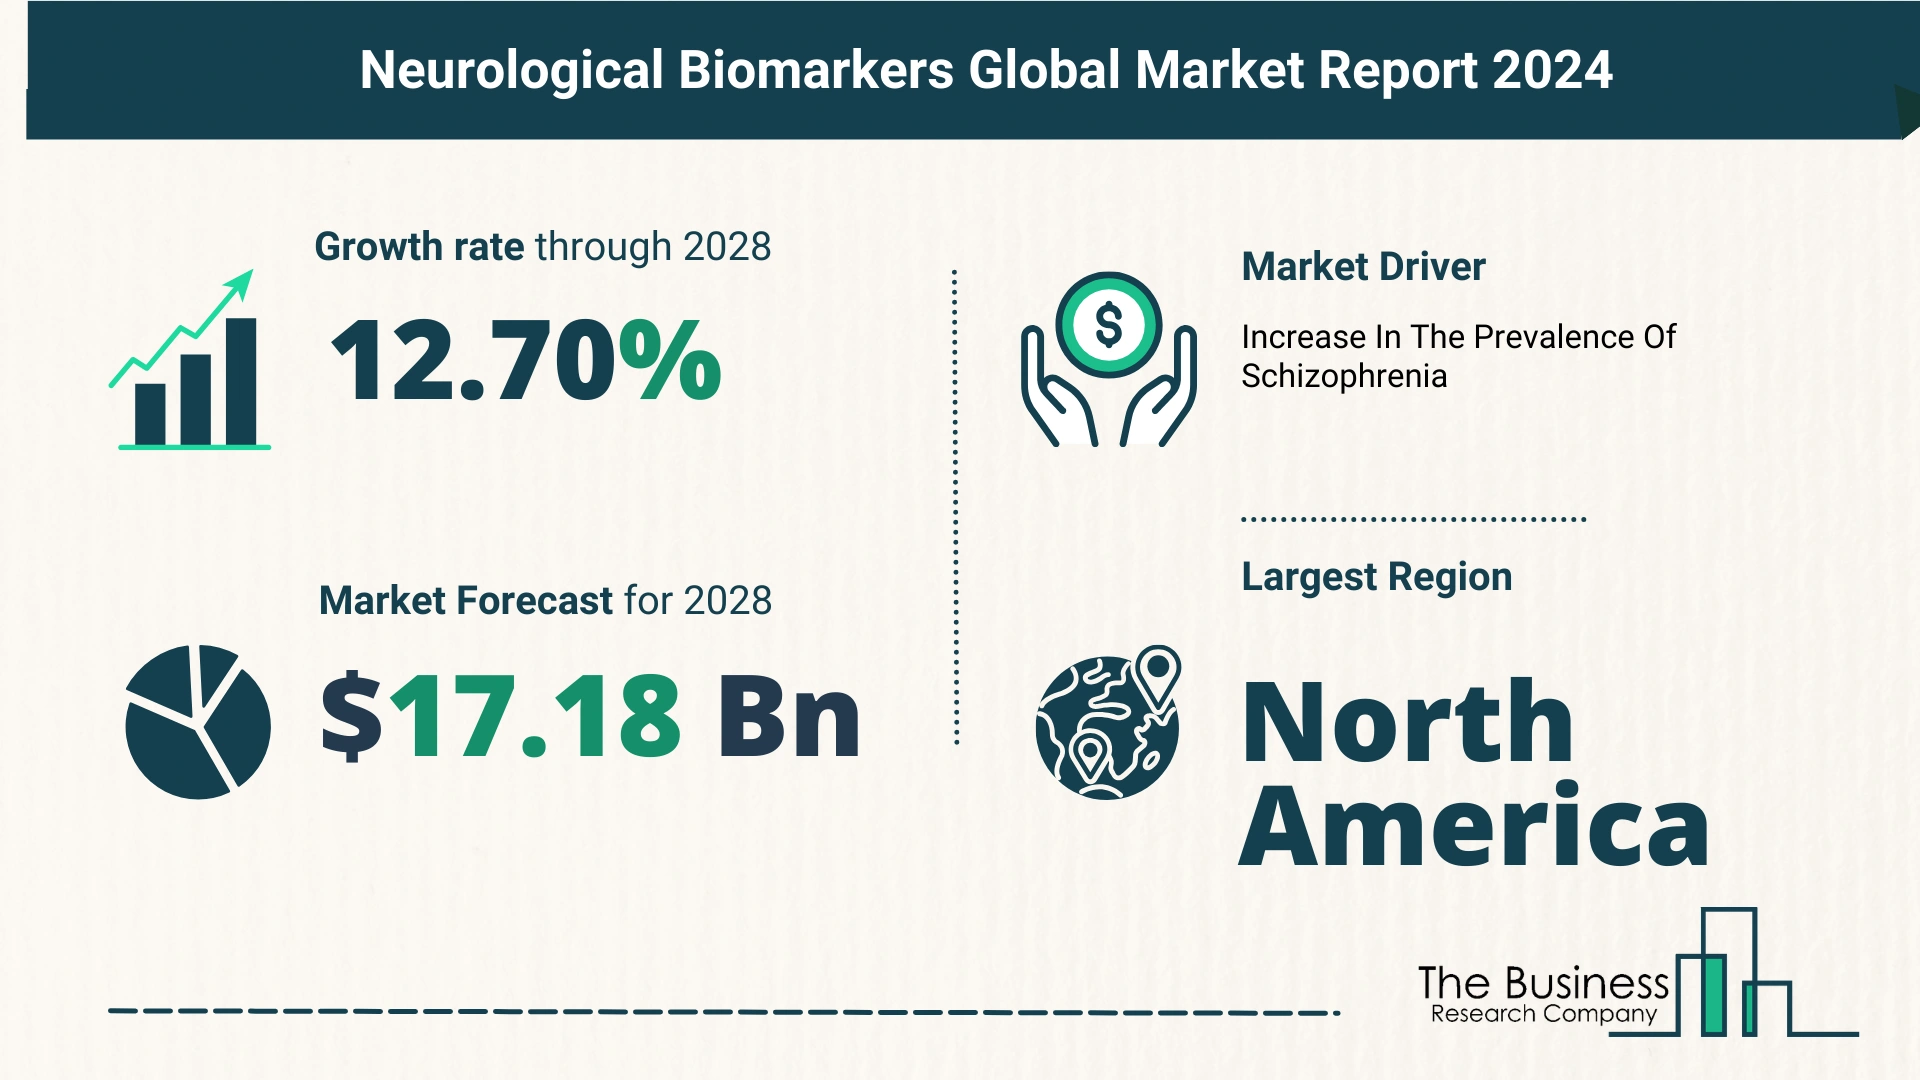 Neurological Biomarkers Market Forecast 2024: Forecast Market Size, Drivers And Key Segments